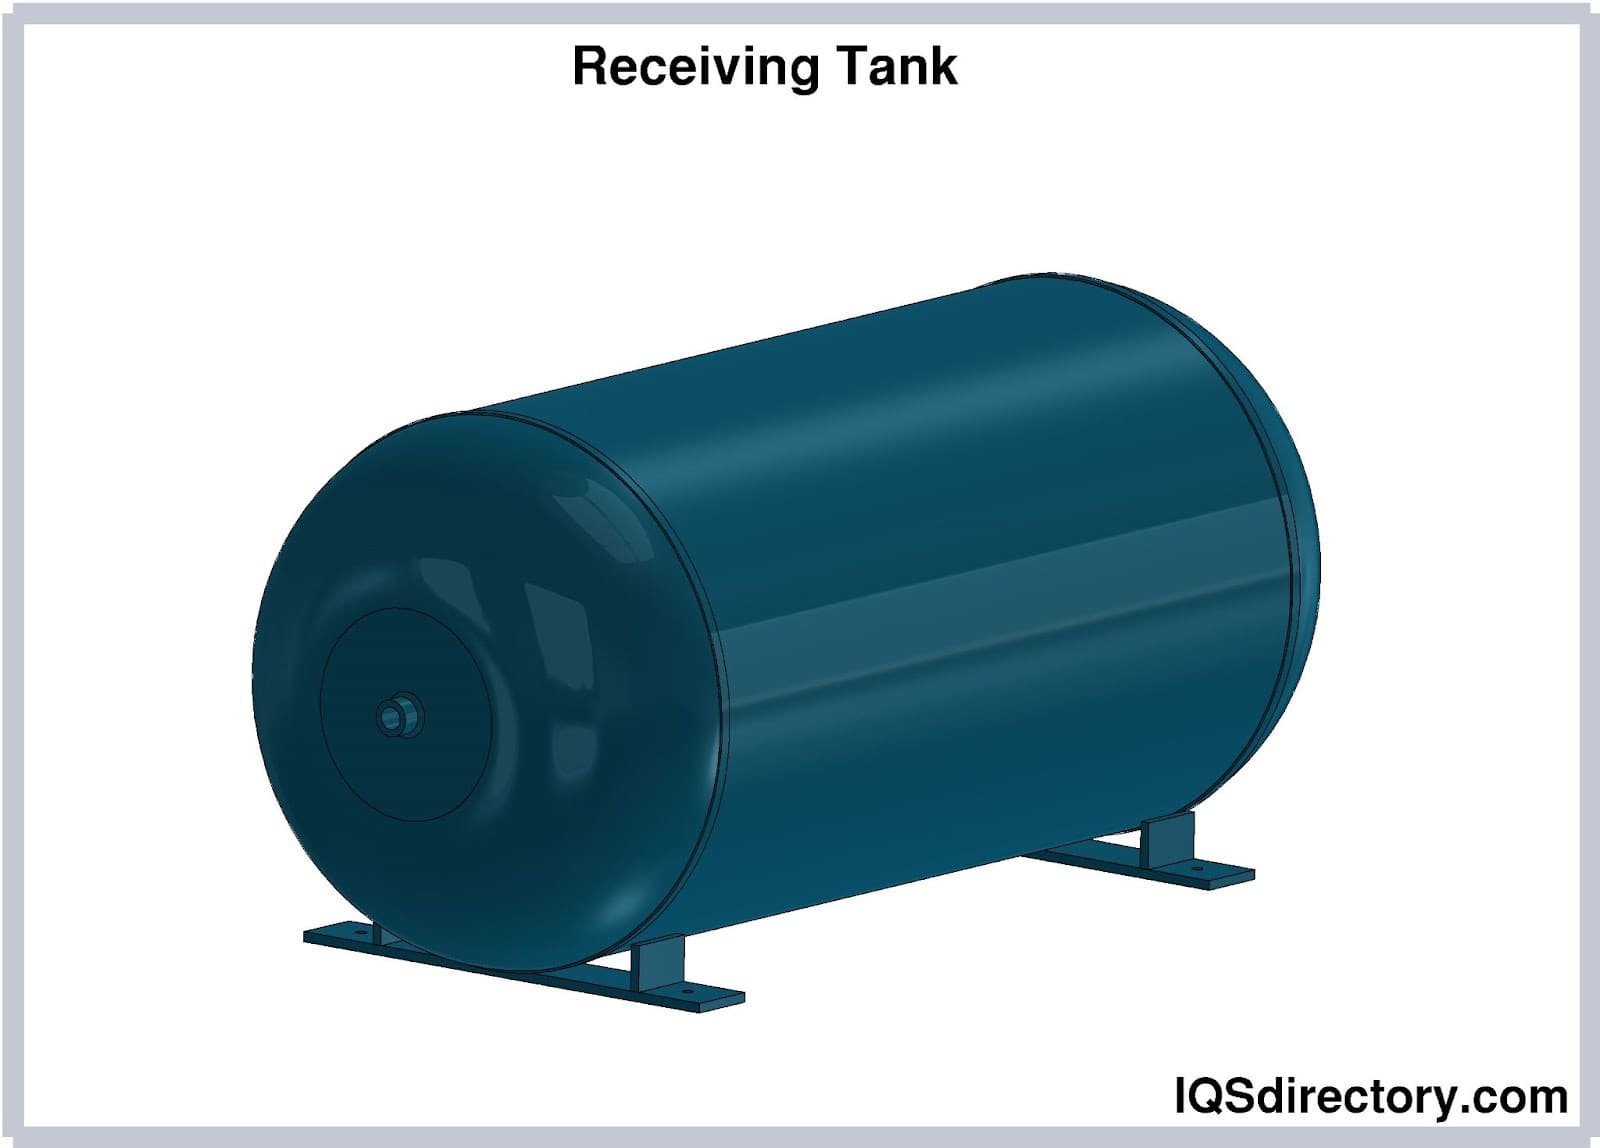 Receiving Tank